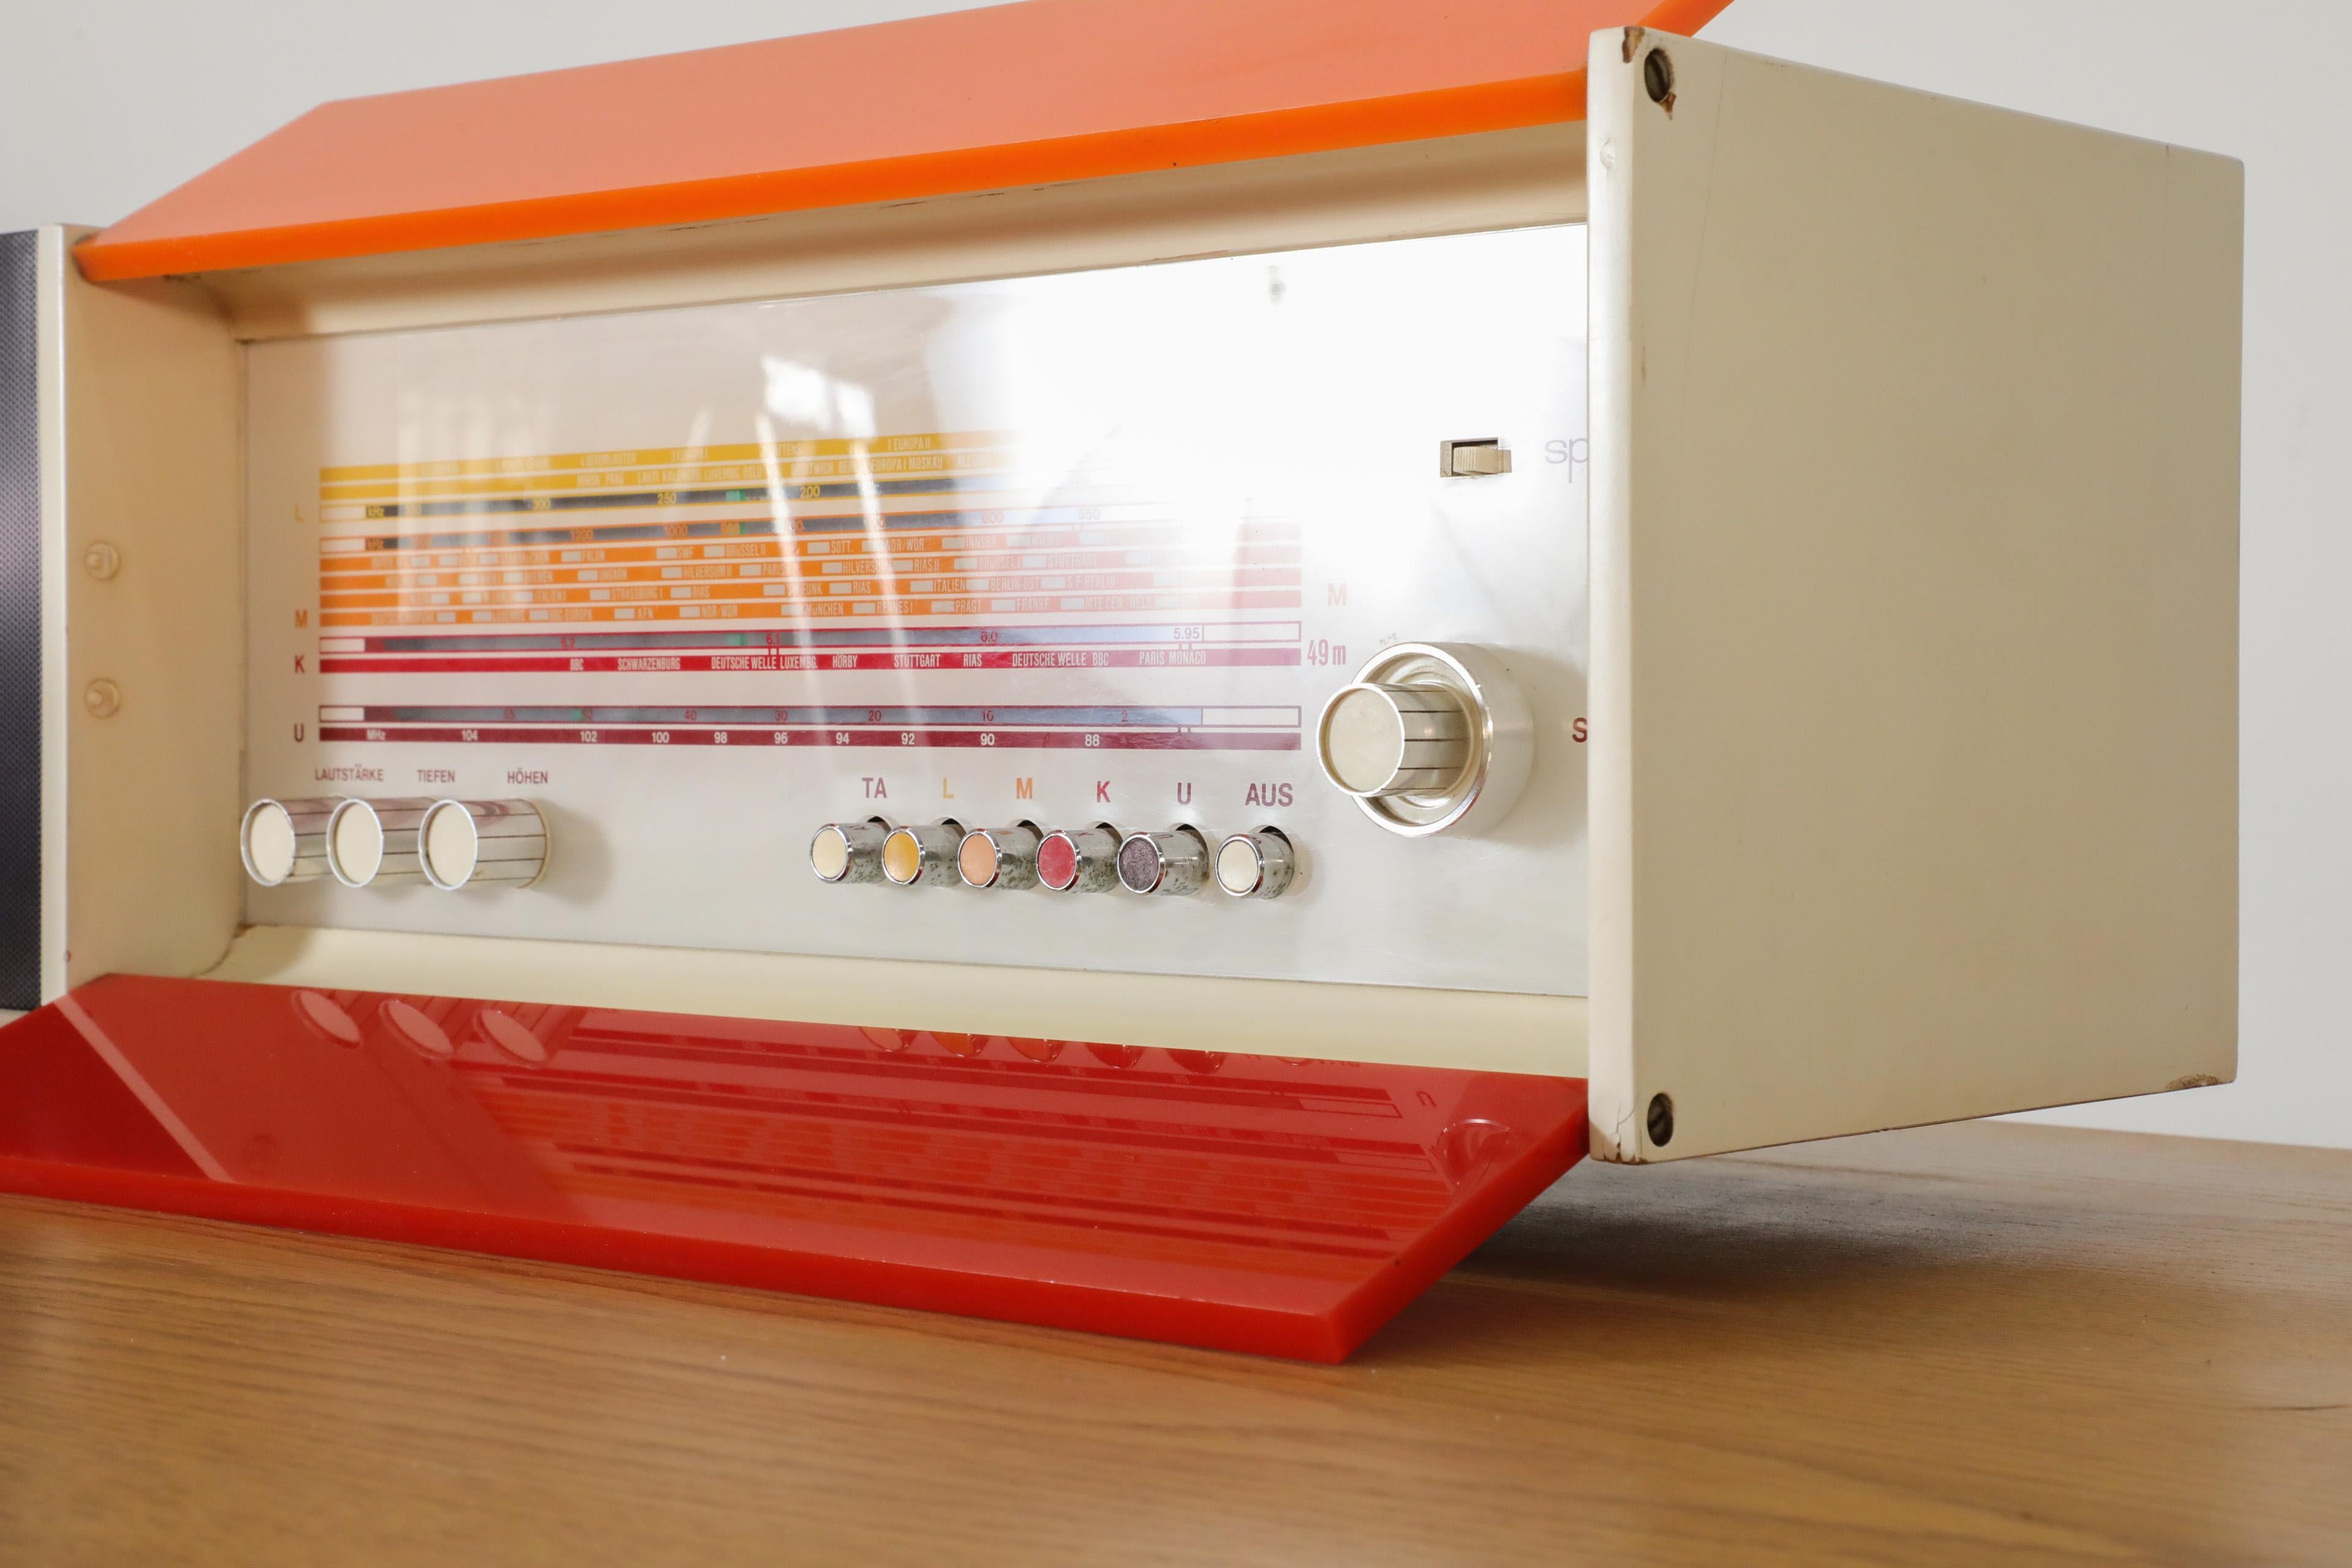 Raymond Loewy Designed Nordmende Spectra Futura Transistor Radio in Red & Orange For Sale 1